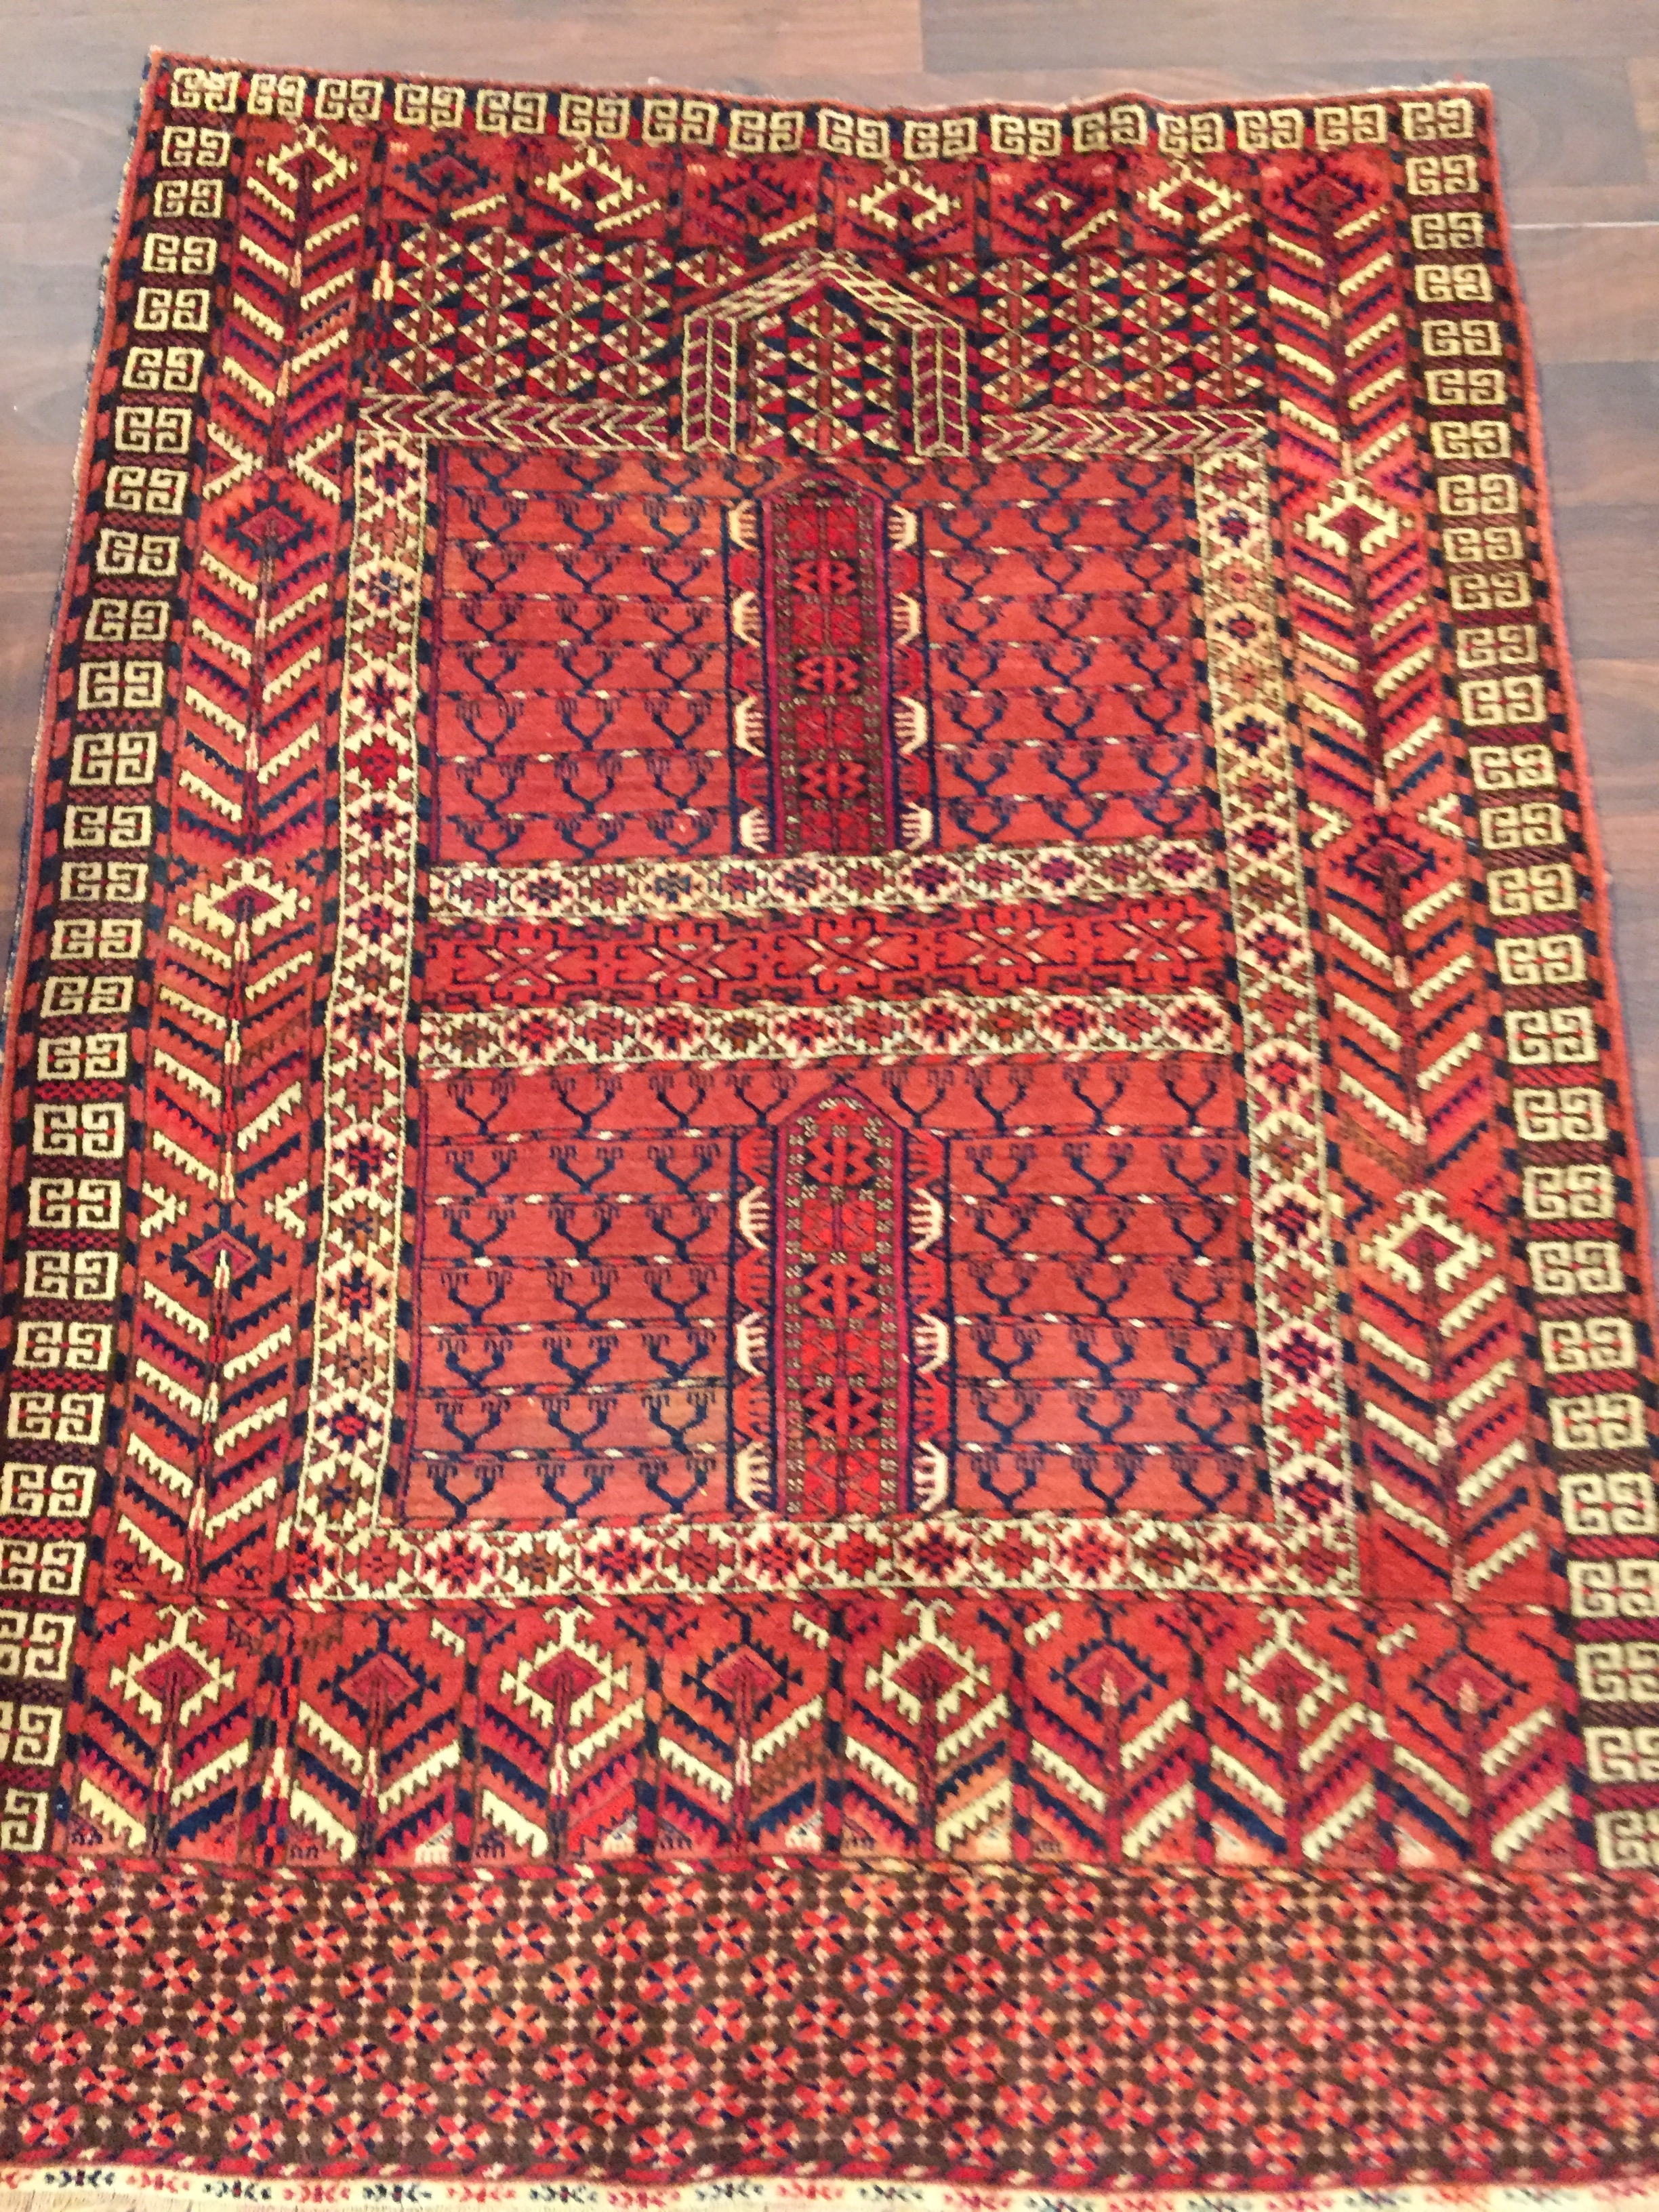 Turcoman Ensi carpet, 80yrs old, 3ft7in x 4ft5in